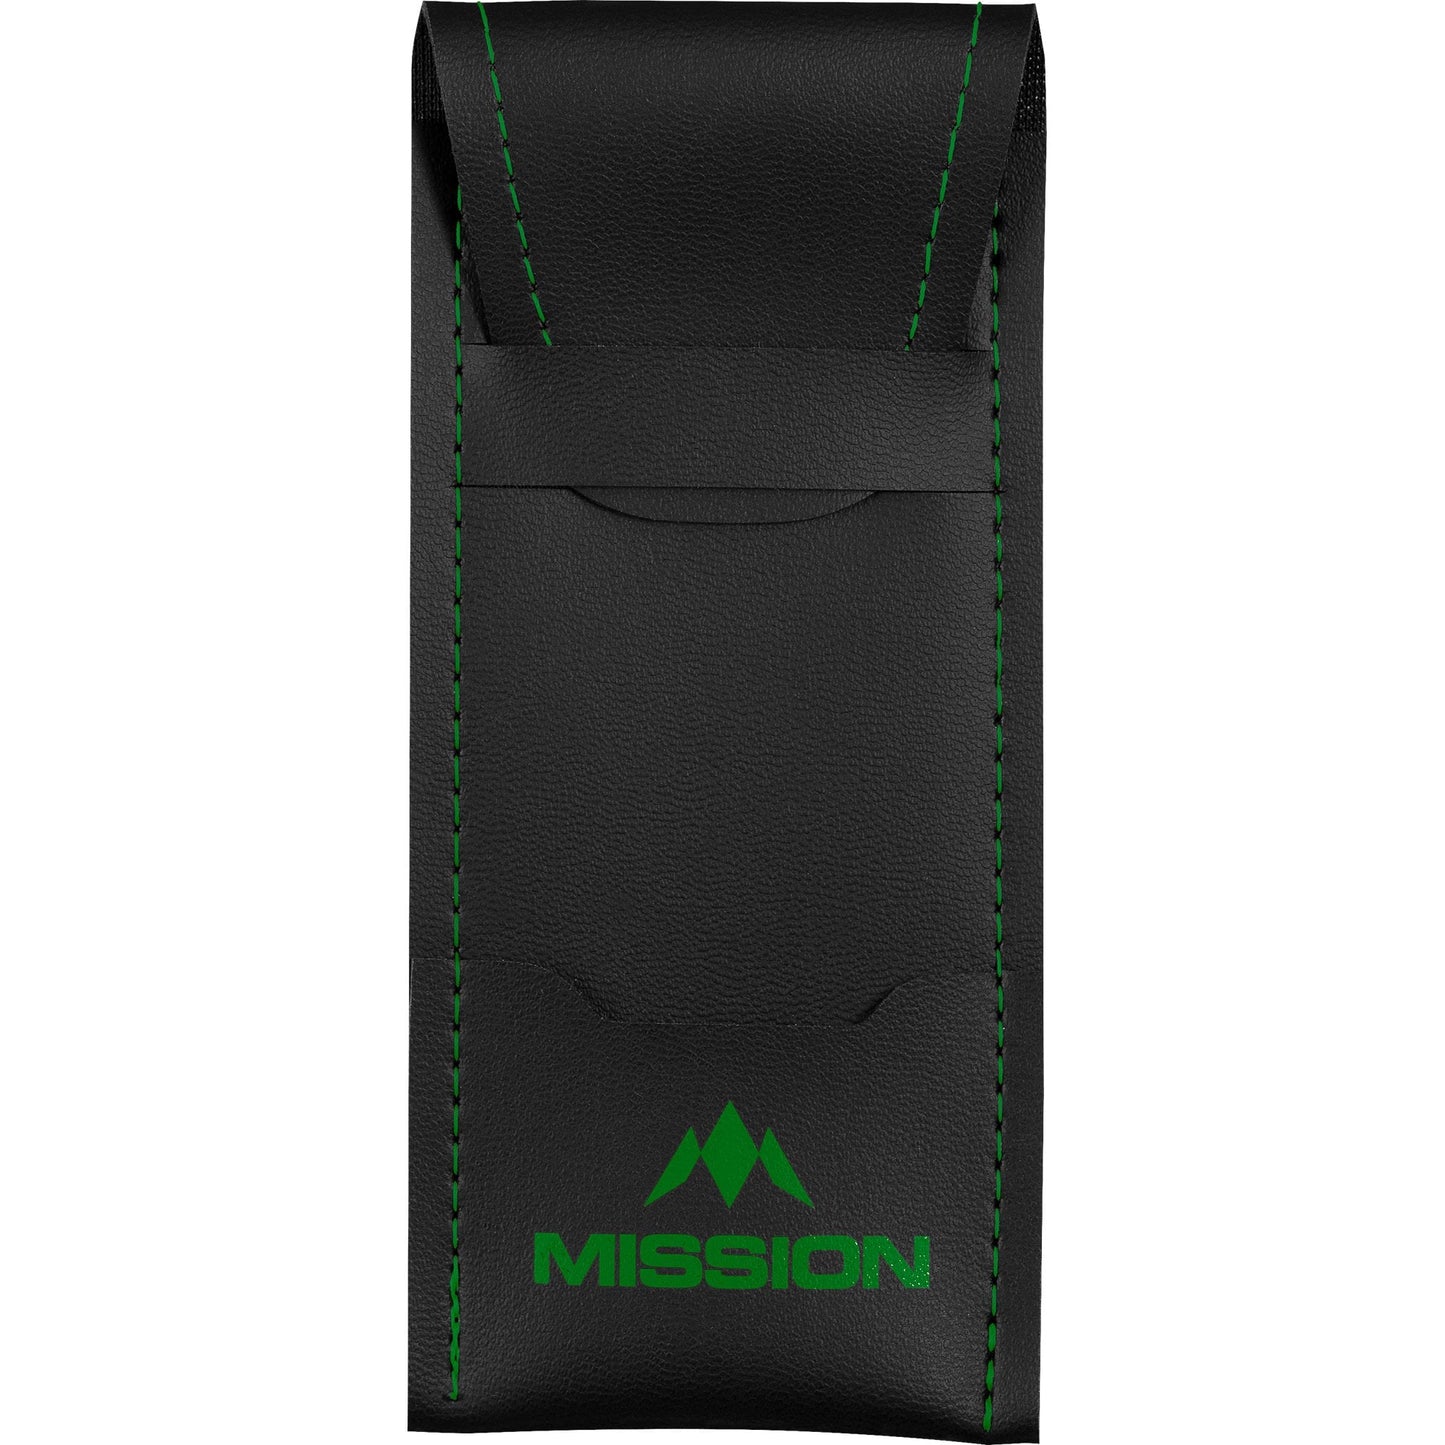 Mission Sport 8 Darts Case - Black Bar Wallet with Trim Green